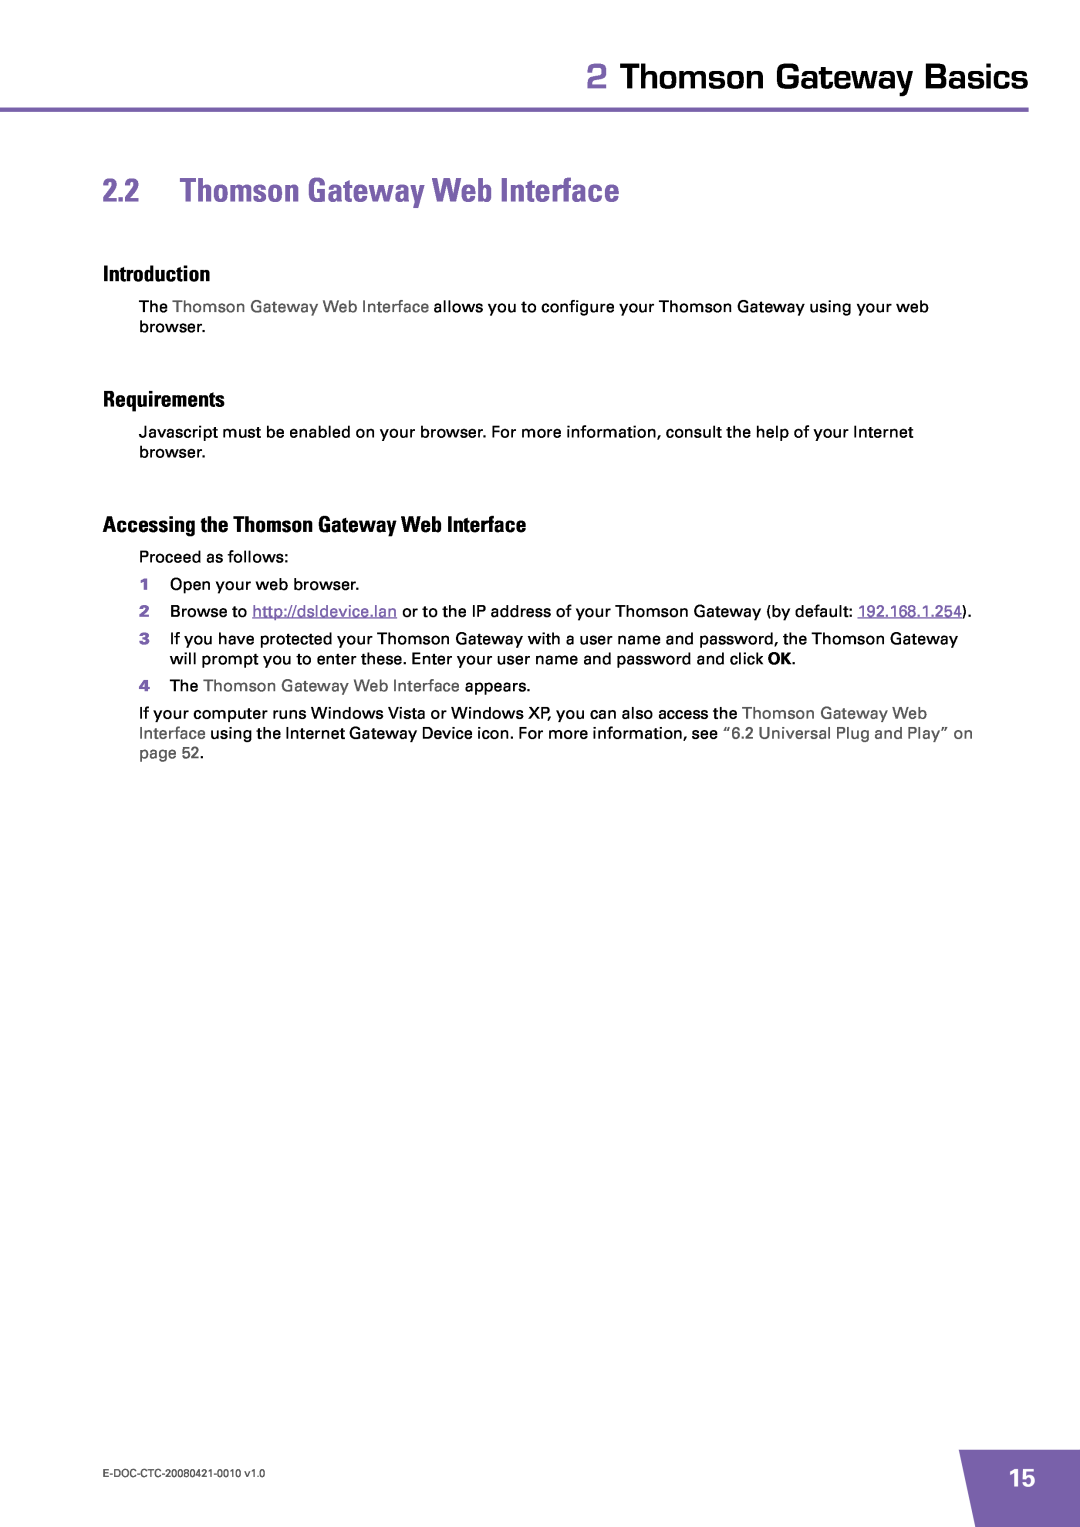 Technicolor - Thomson TG784 manual Requirements, Accessing the Thomson Gateway Web Interface, Thomson Gateway Basics 